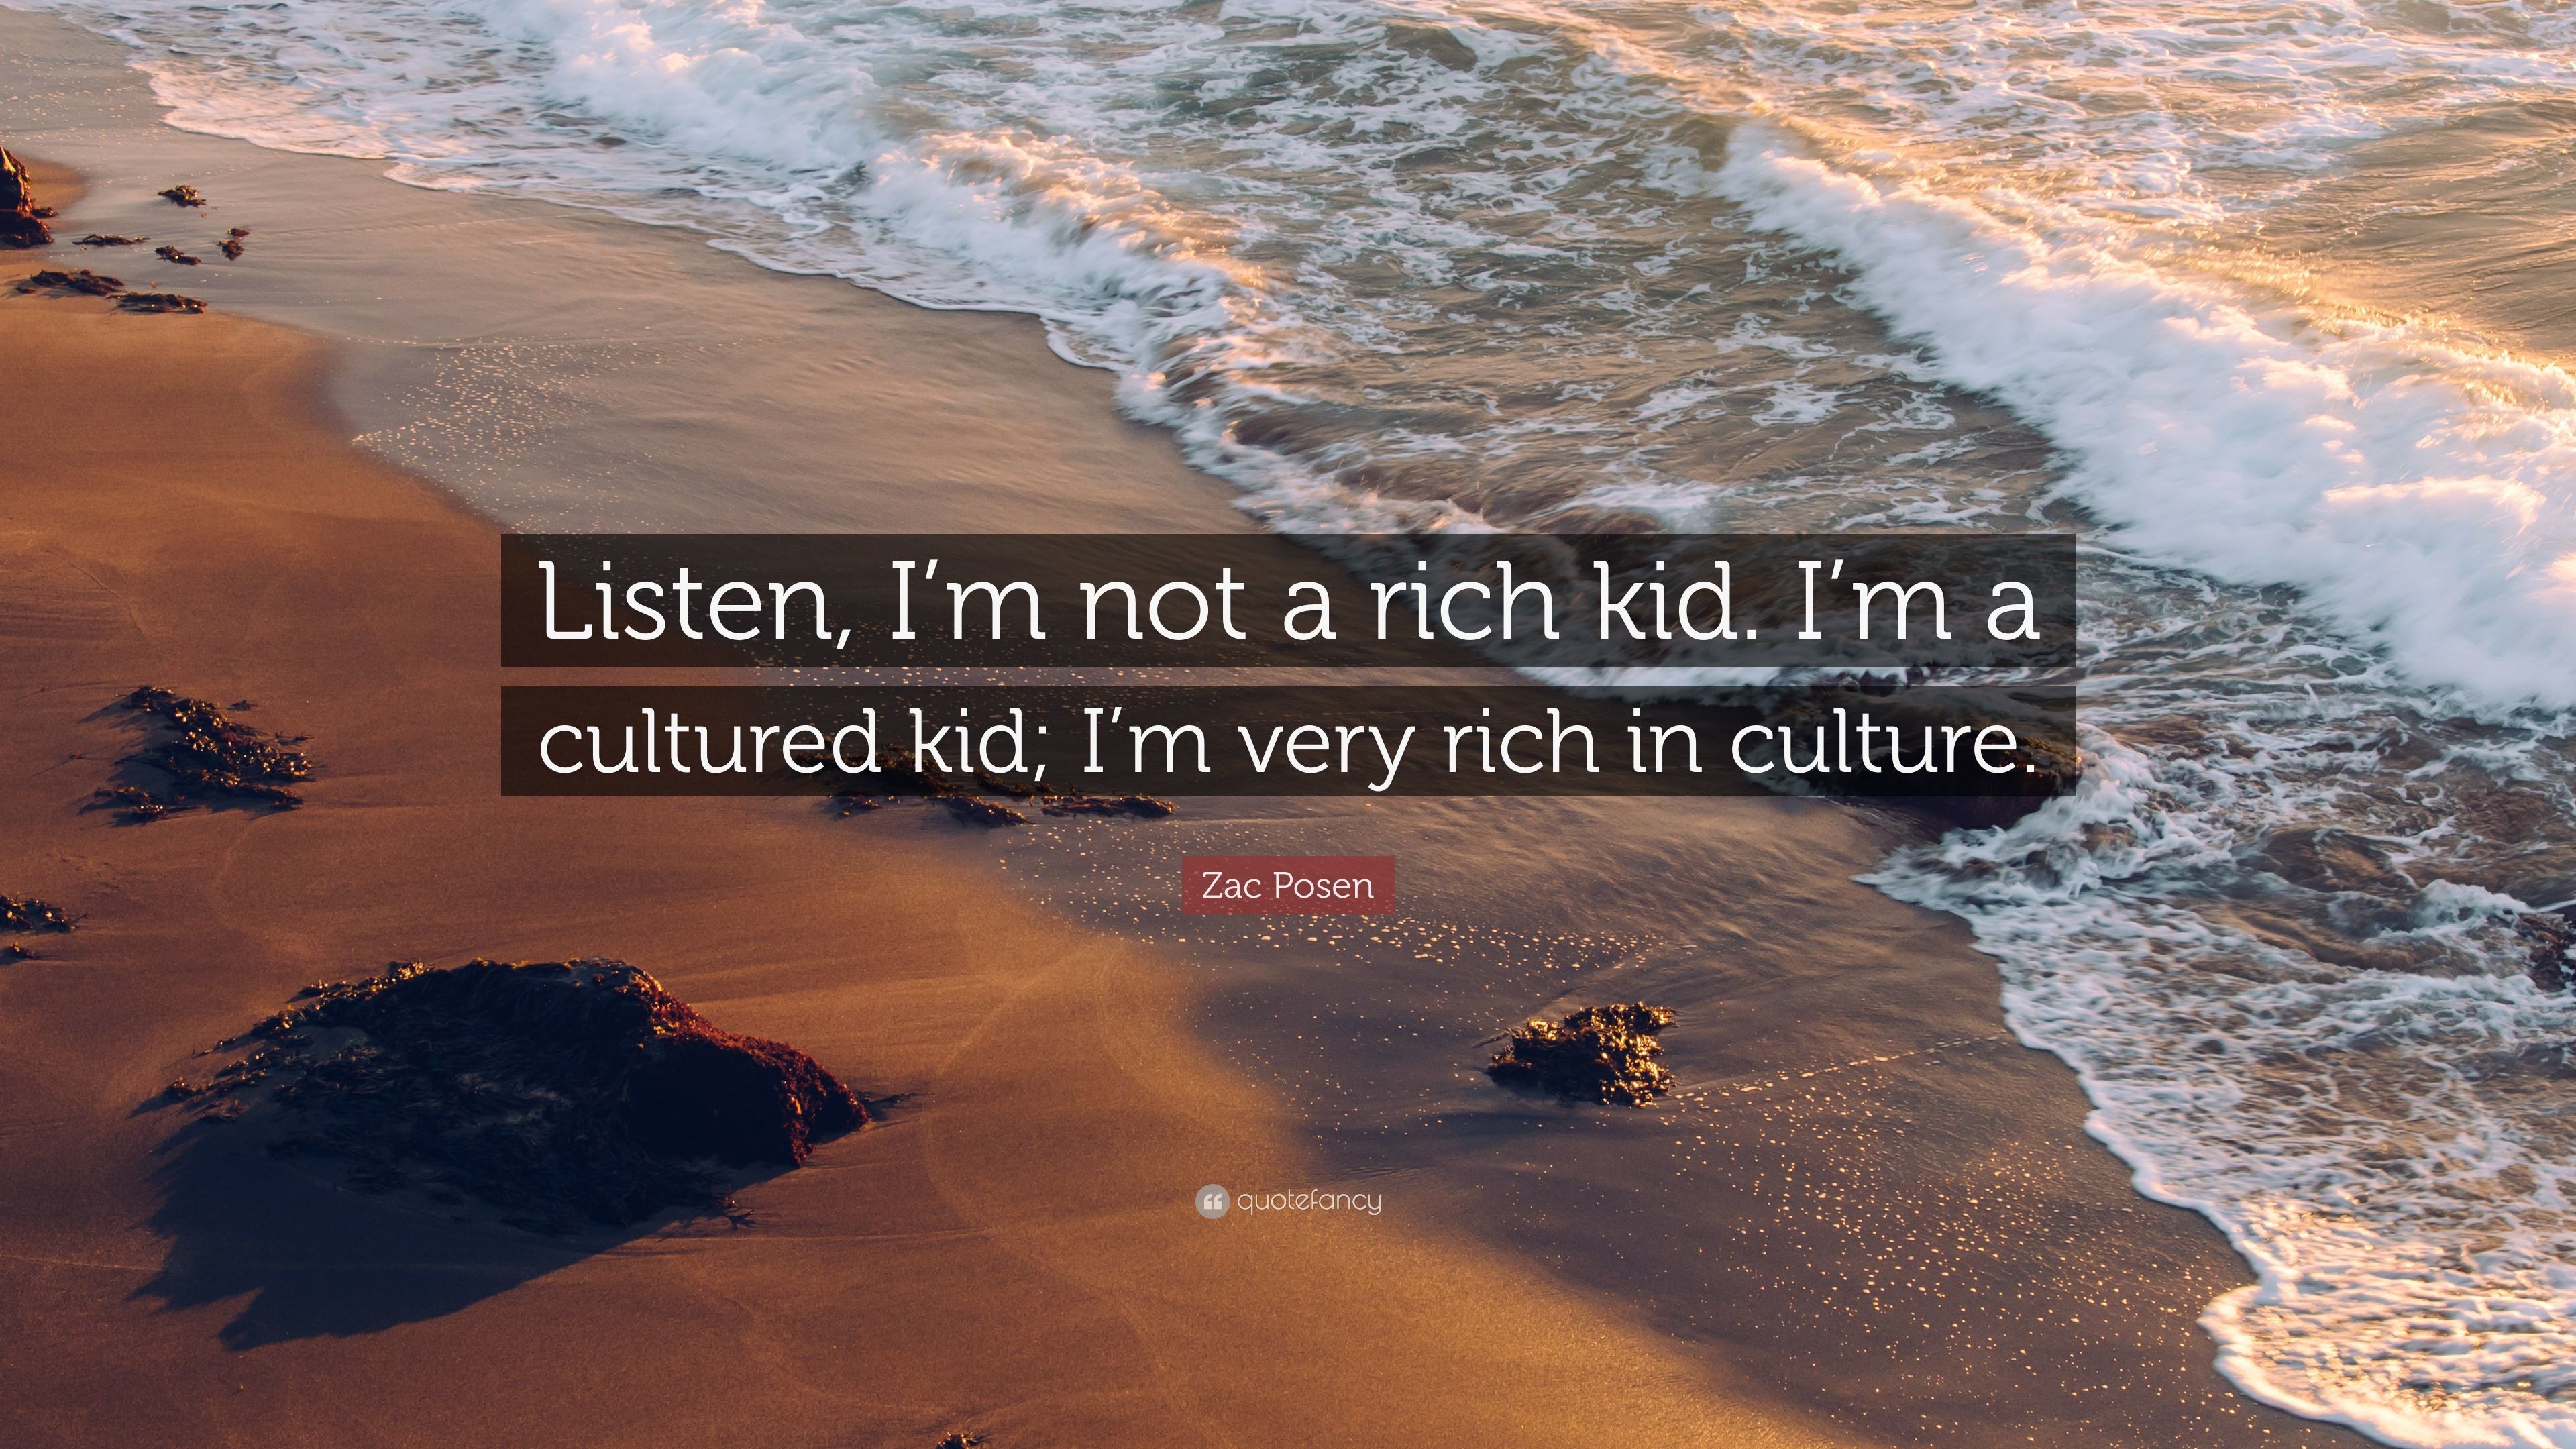 3840x2160 Zac Posen Quote: “Listen, I'm not a rich kid. I